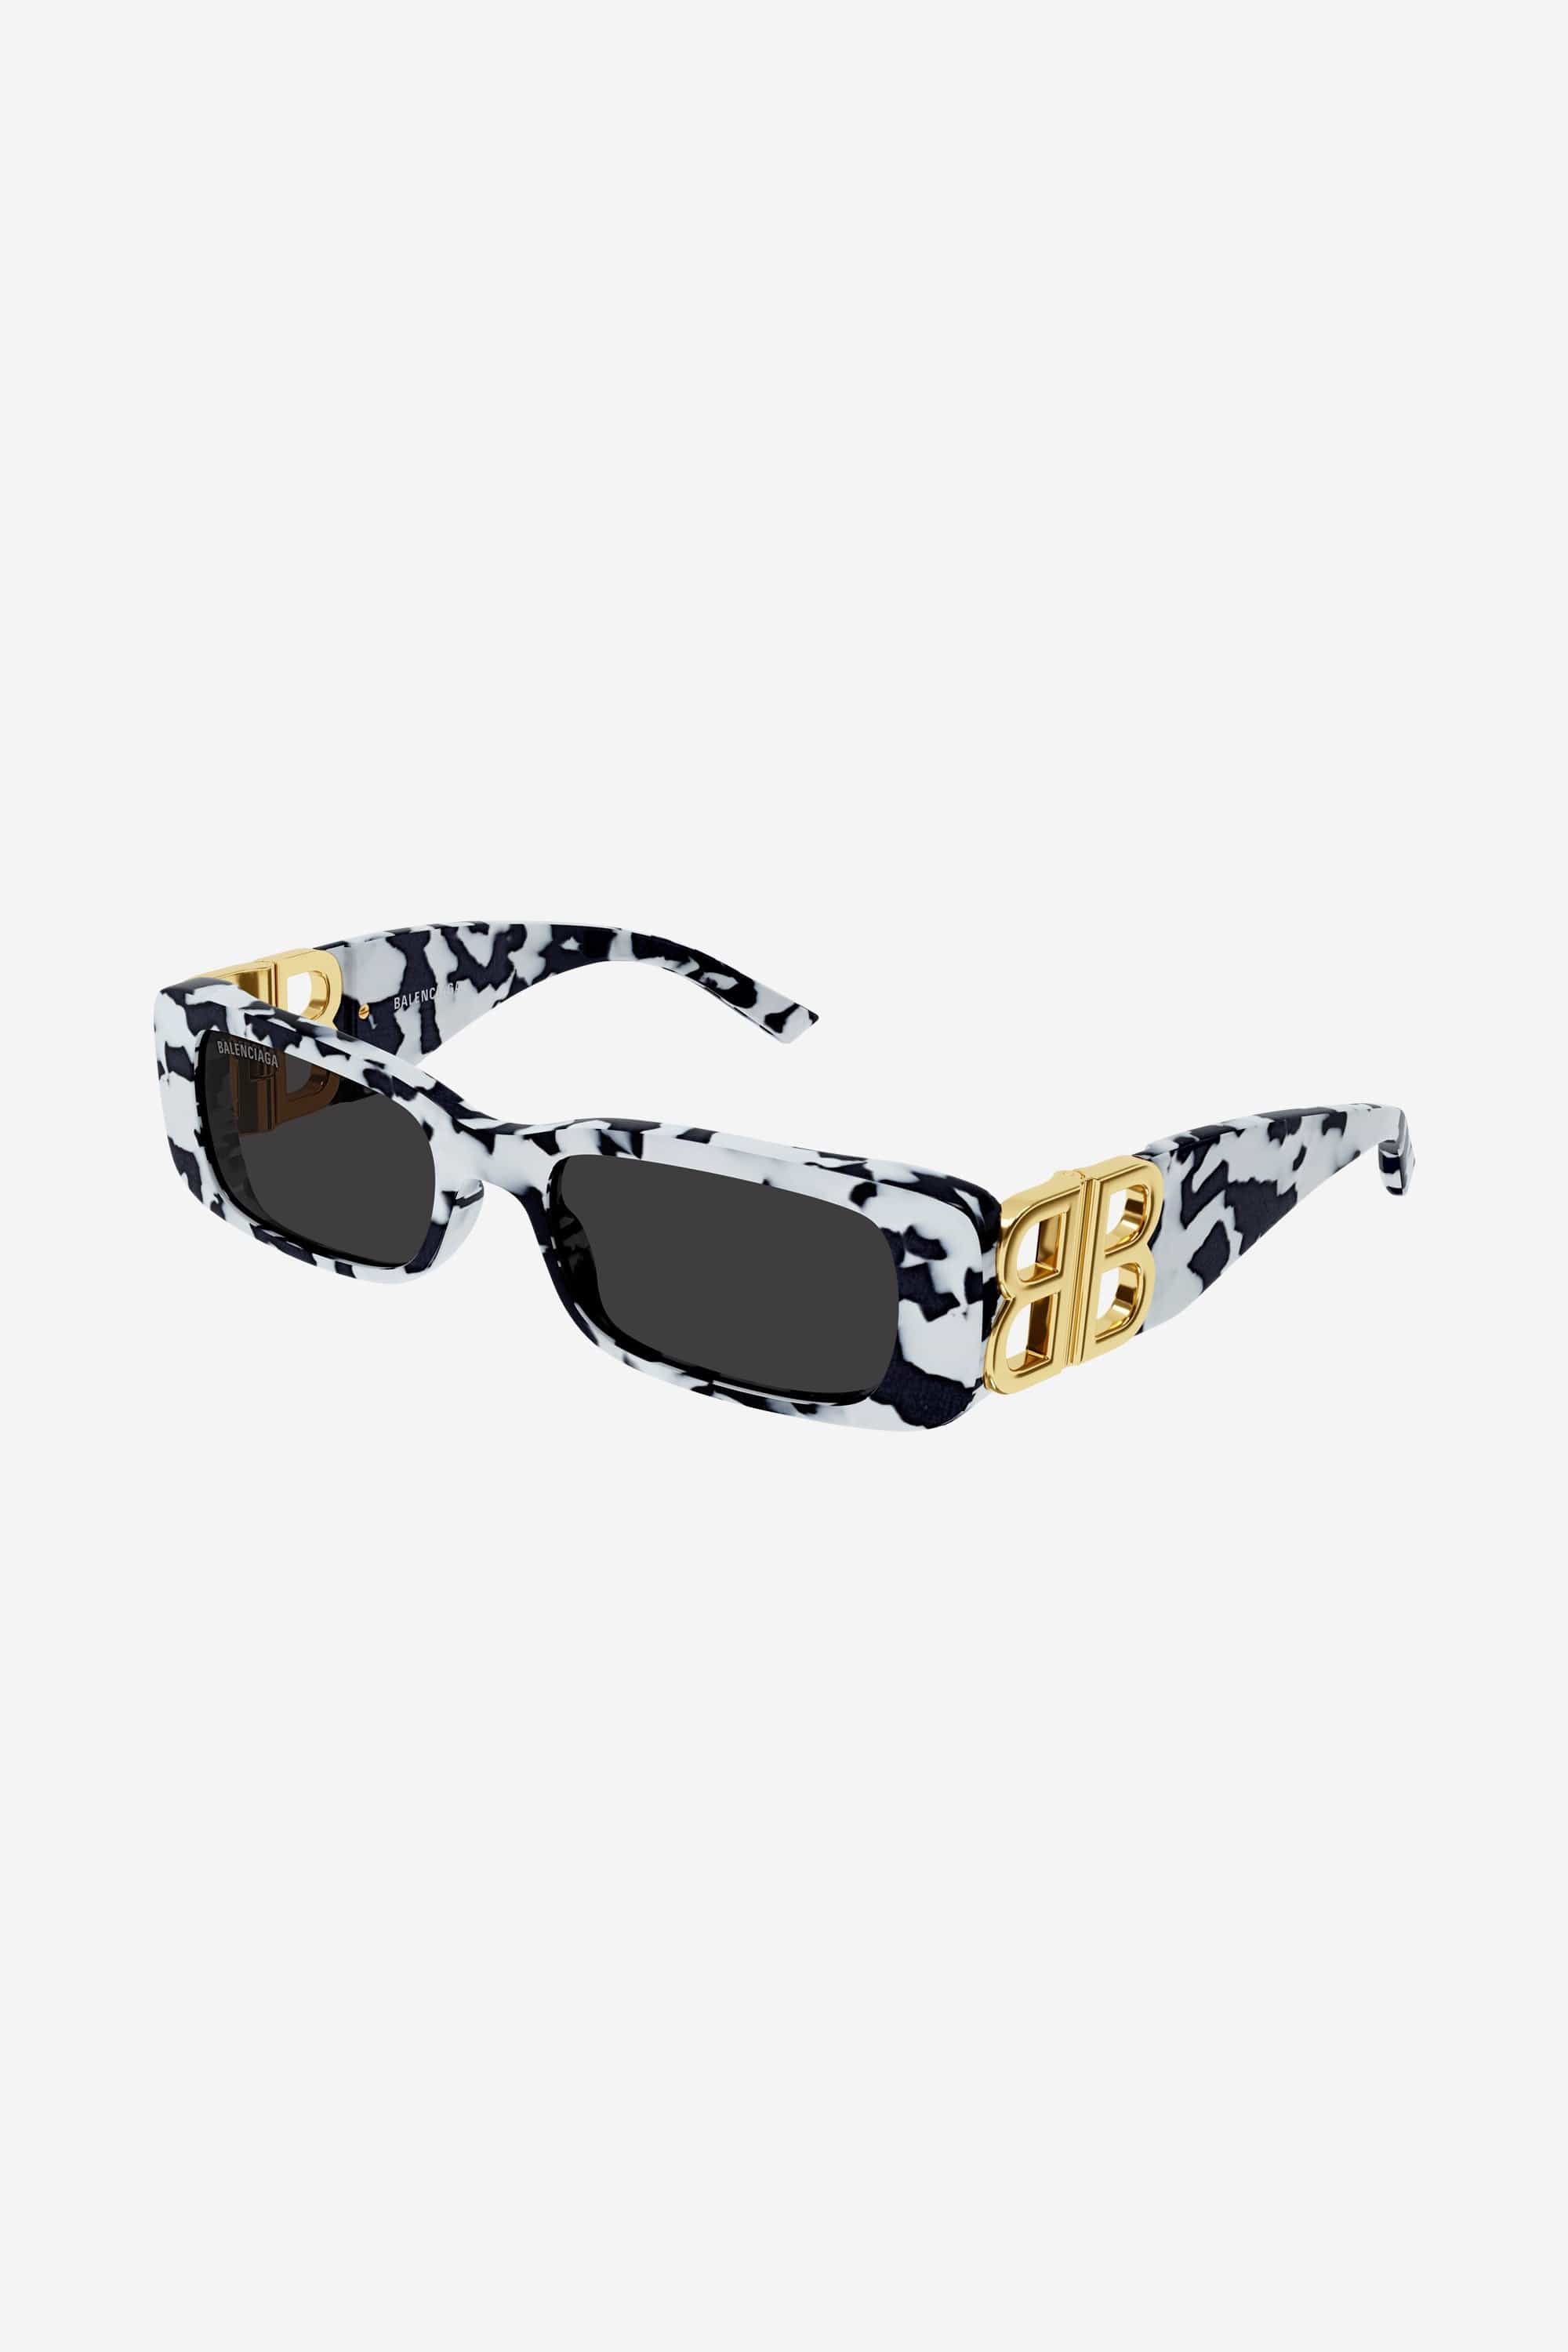 Balenciaga Dinasty zebra sunglasses - Eyewear Club